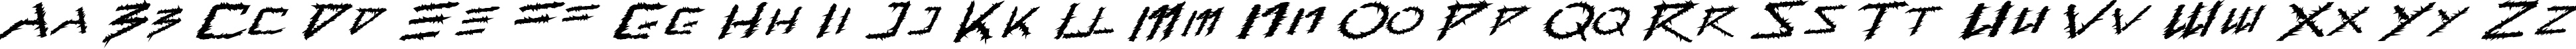 Пример написания английского алфавита шрифтом Barbed Type